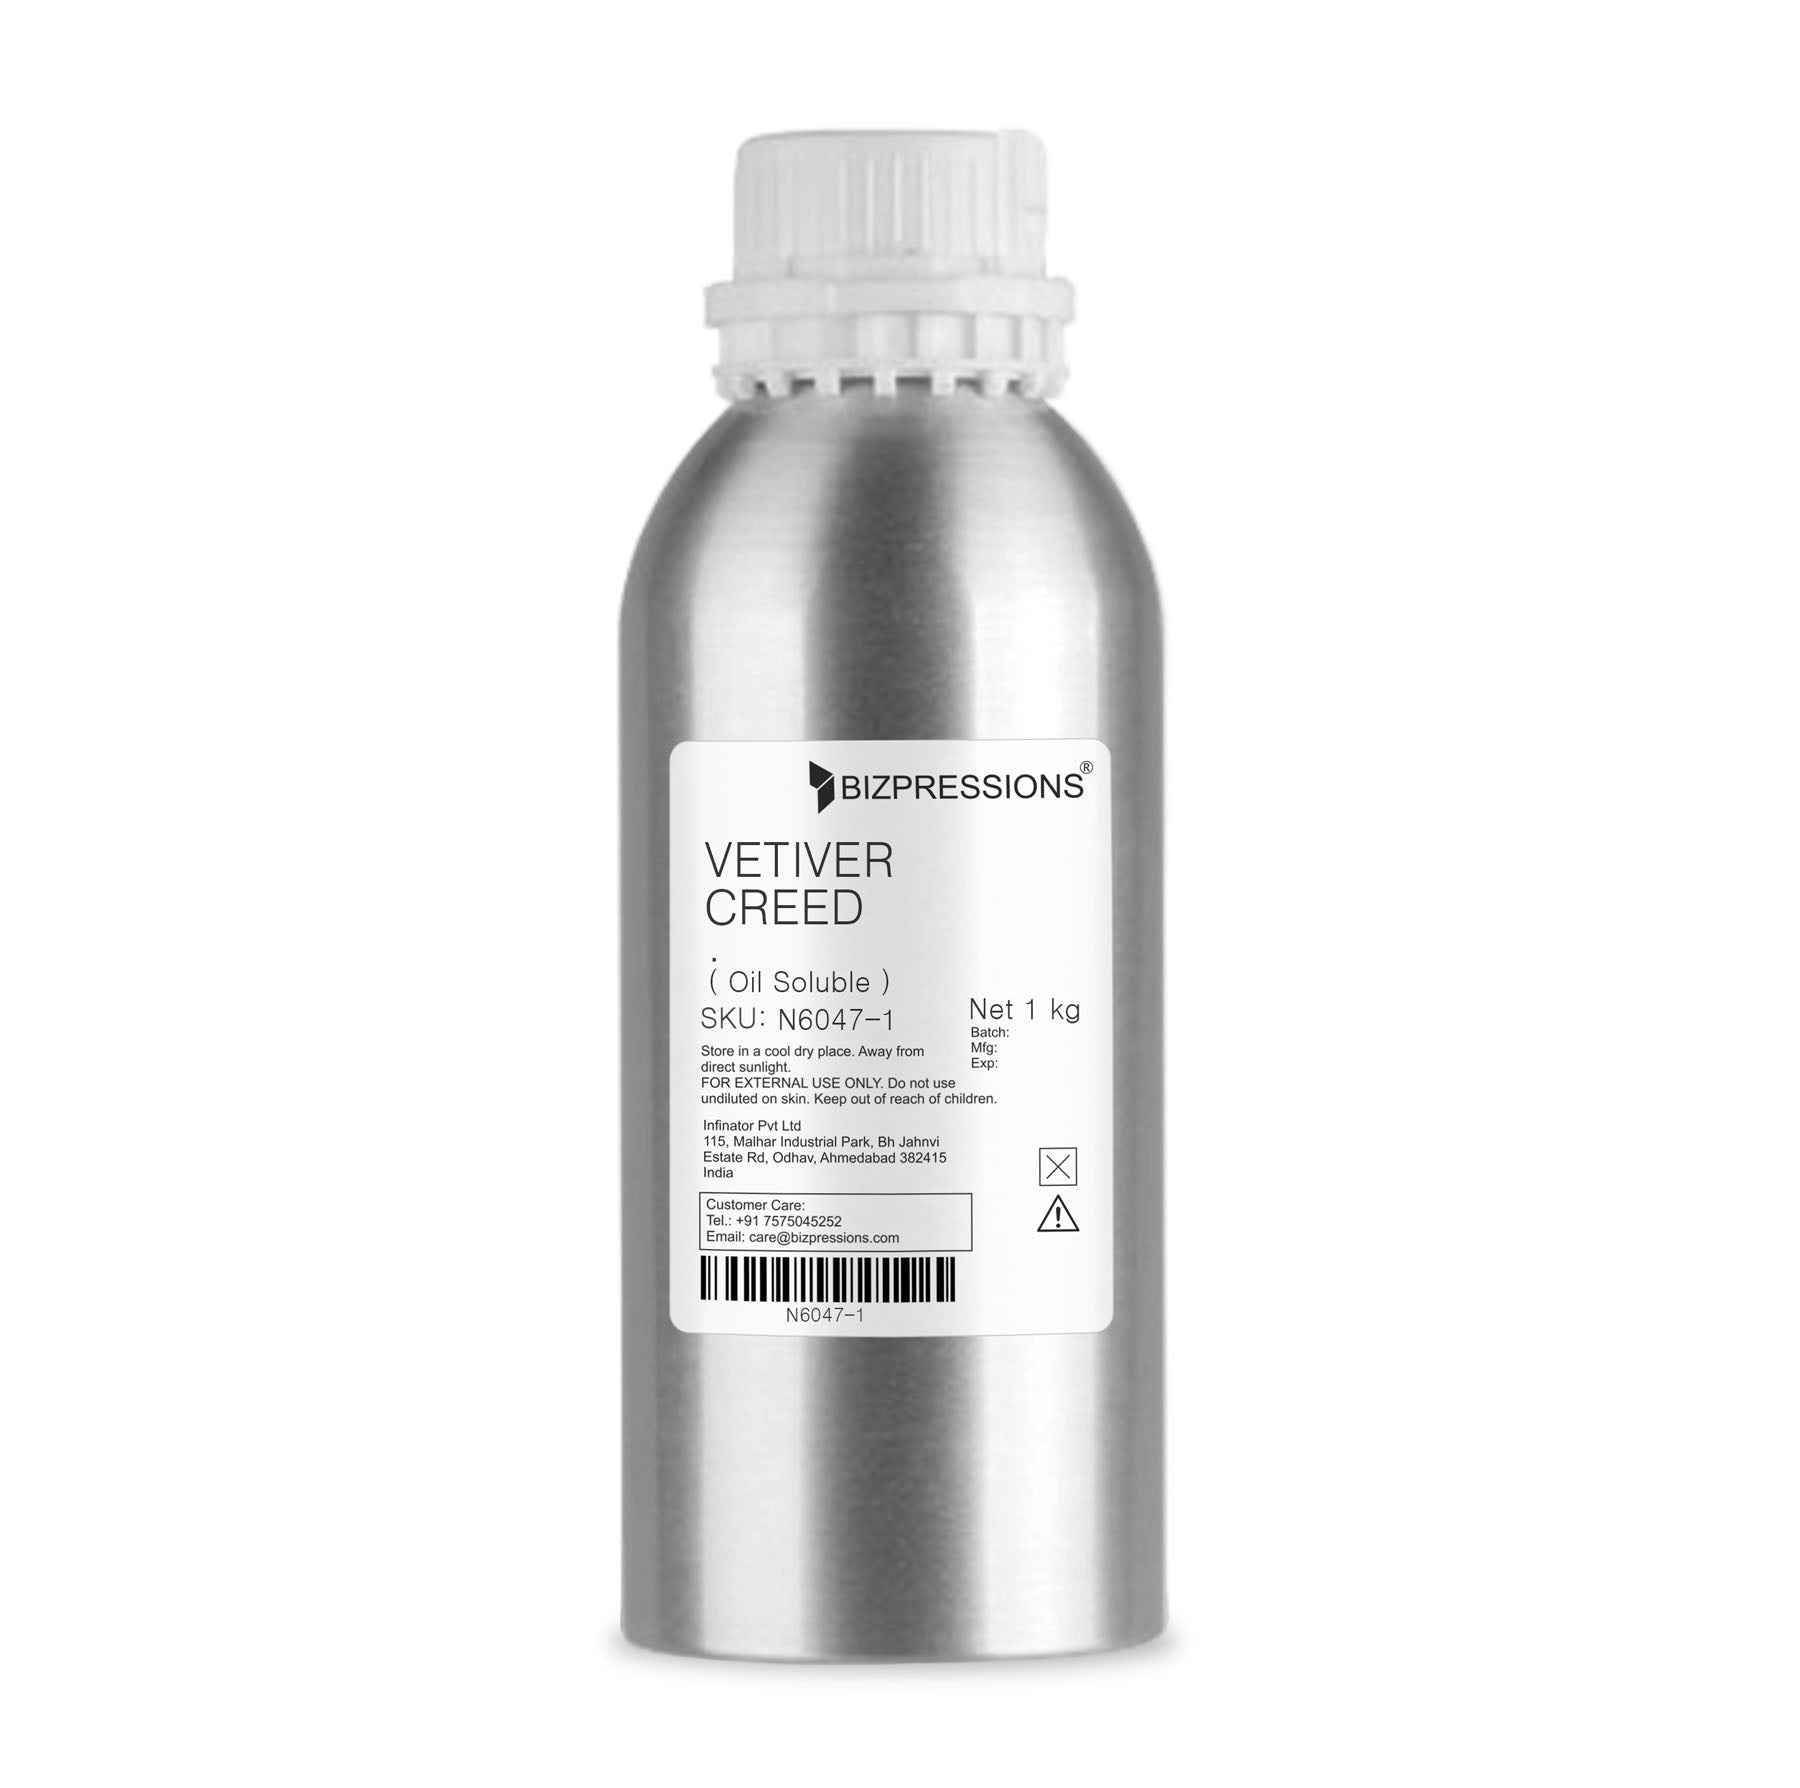 VETIVER CREED - Fragrance ( Oil Soluble ) - 1 kg